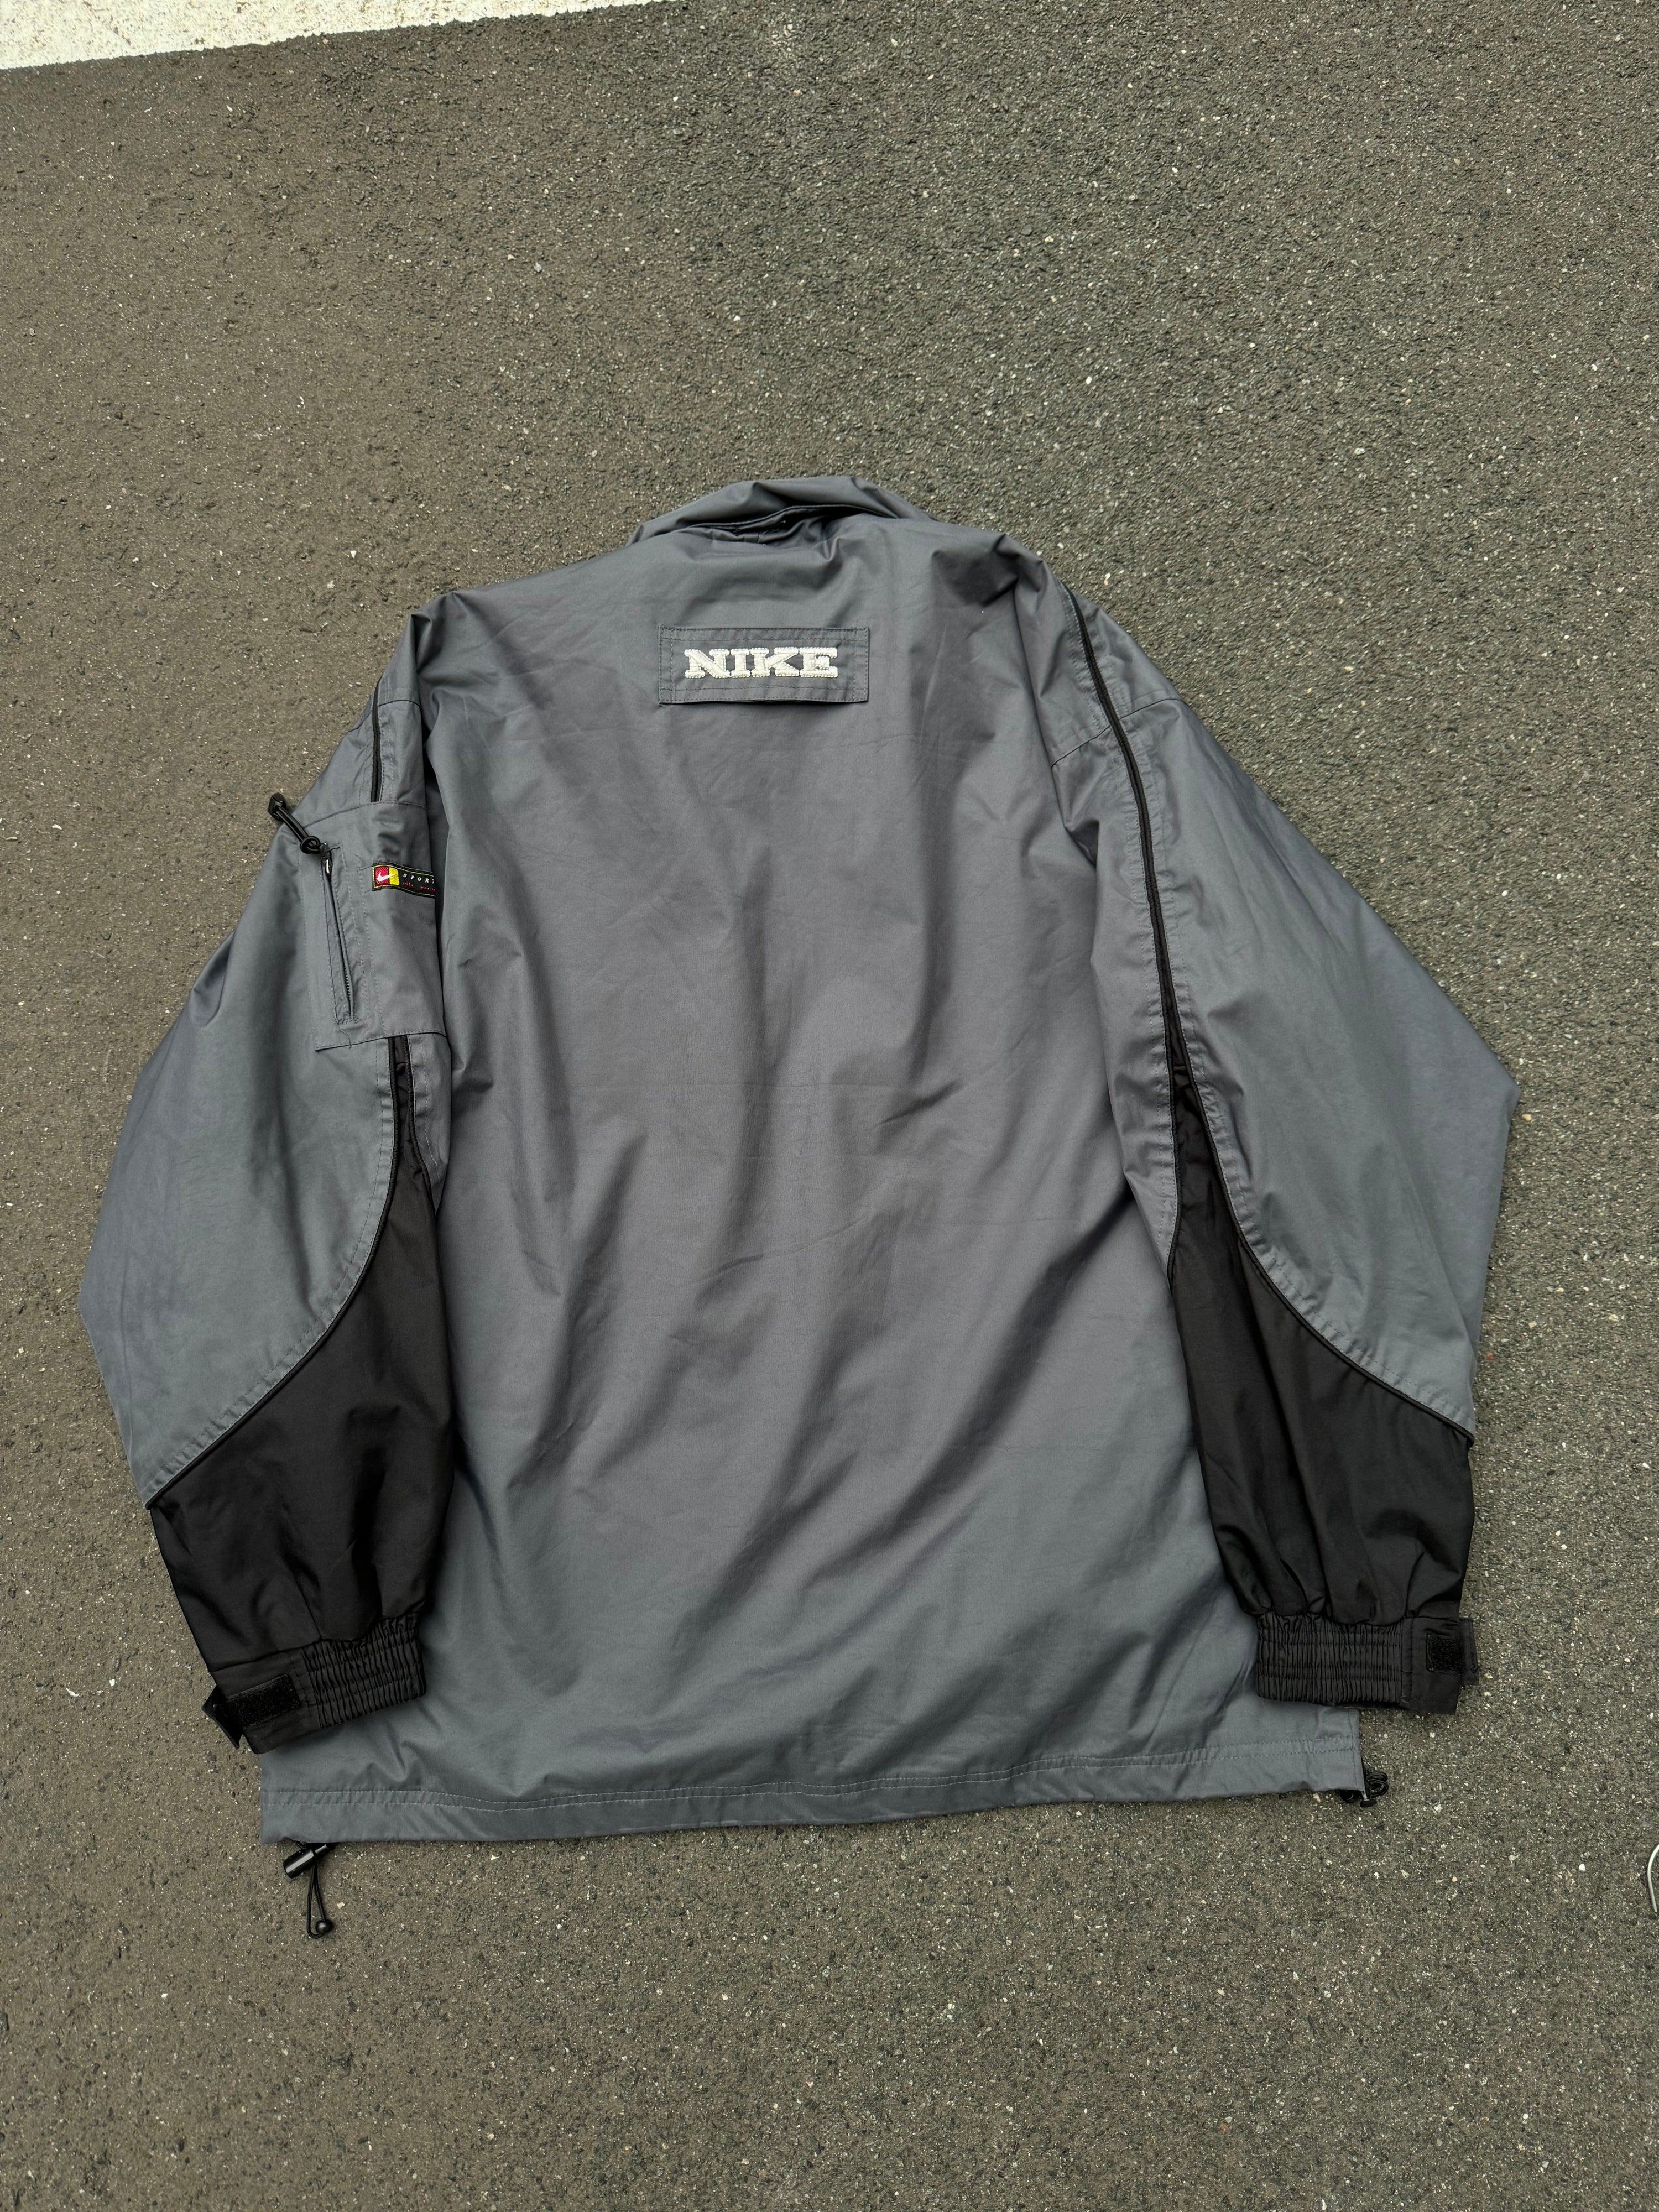 Vintage 90s Nike Premier Light Wind Jacket (XL)